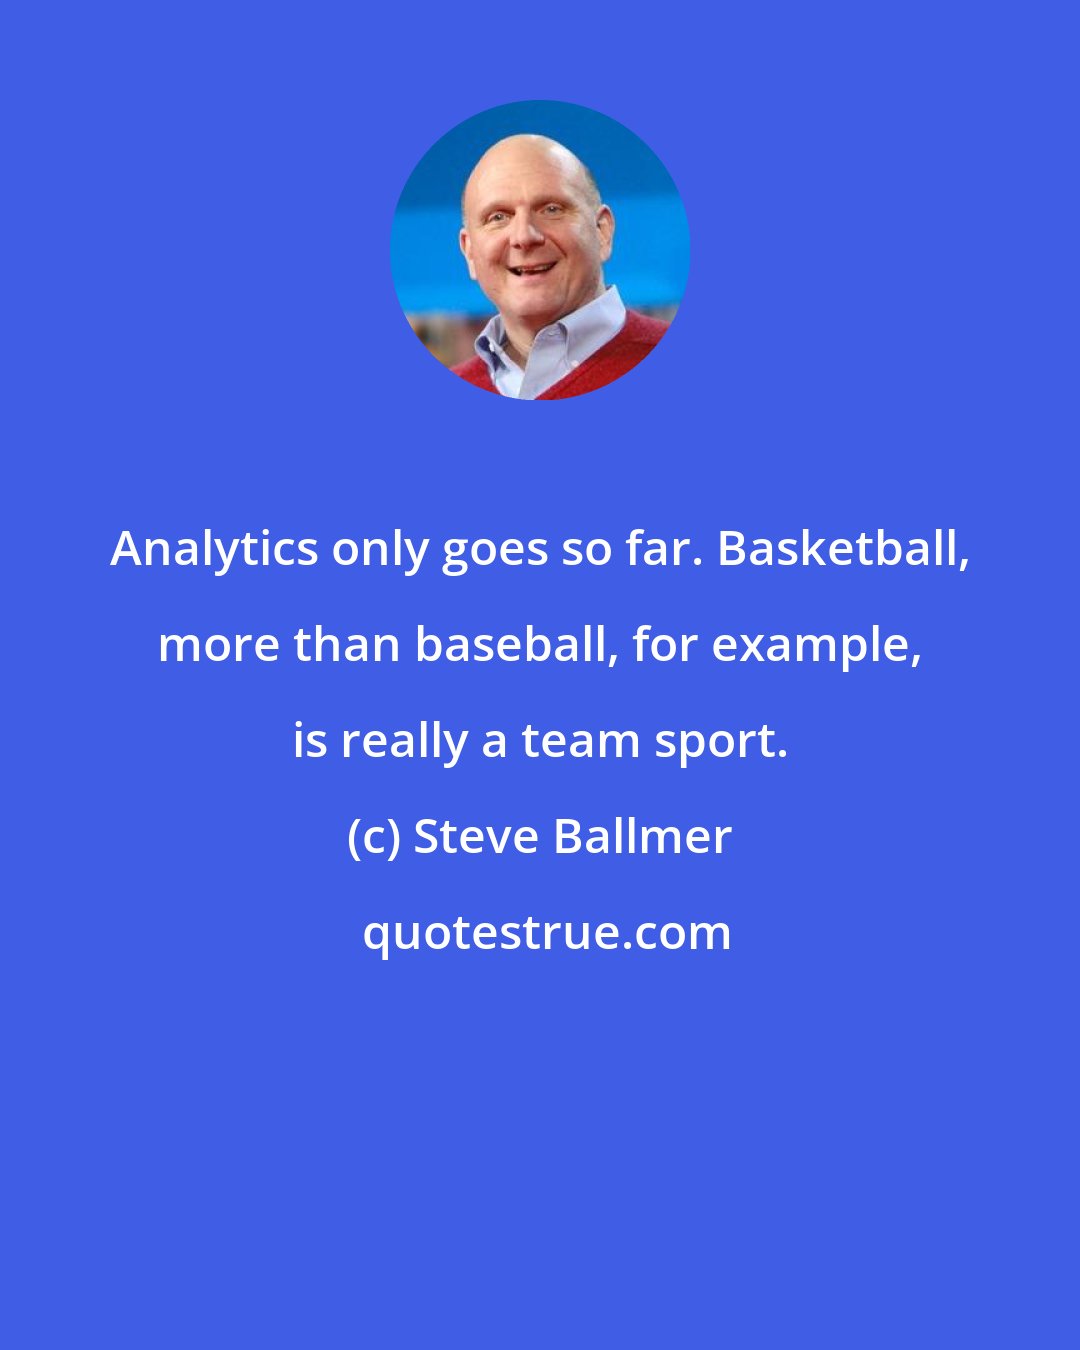 Steve Ballmer: Analytics only goes so far. Basketball, more than baseball, for example, is really a team sport.